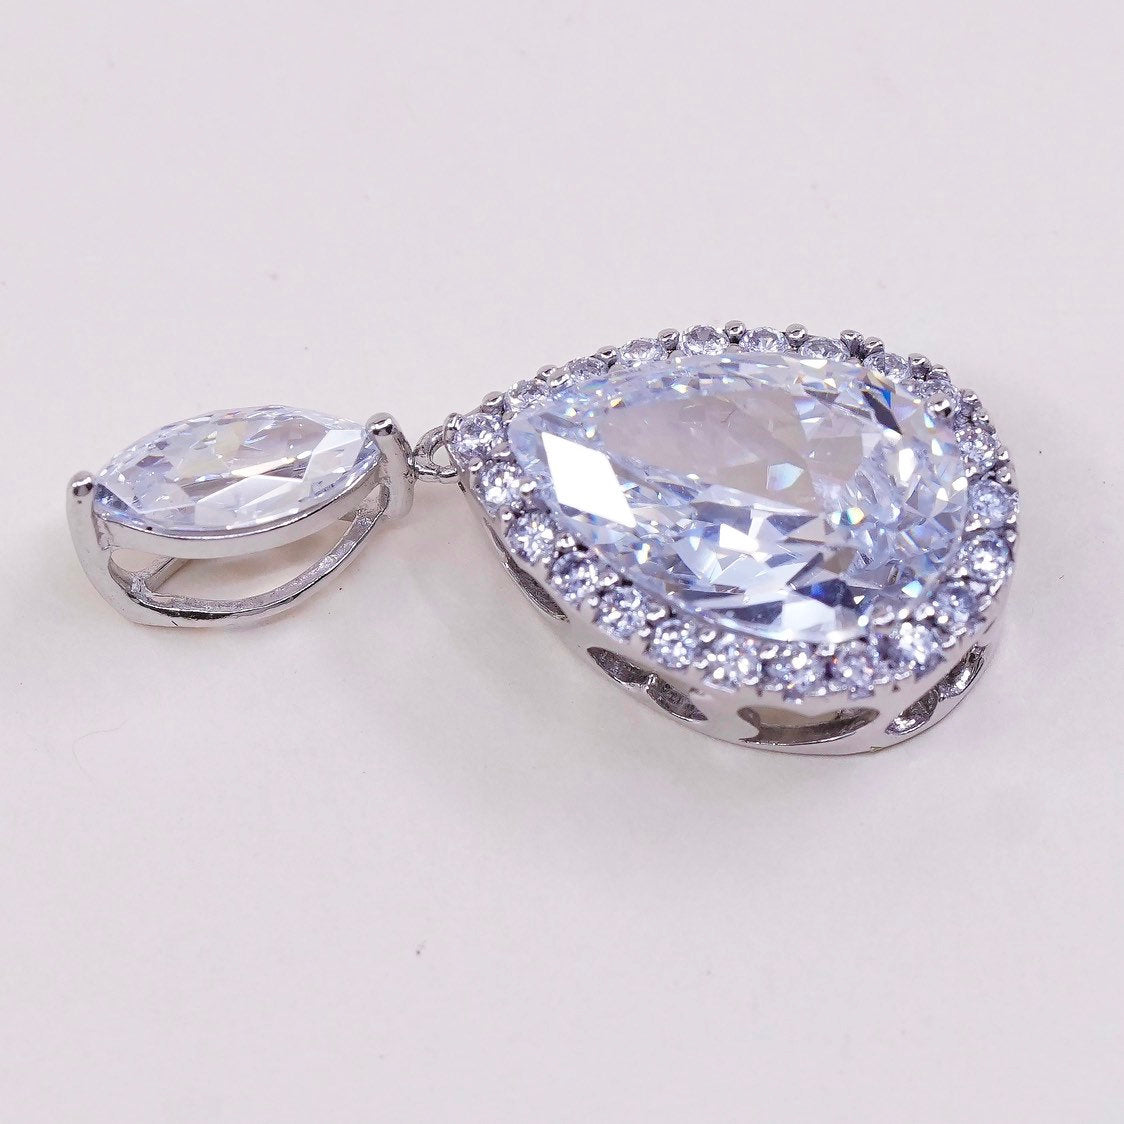 VTG Stauer Clear Diamondaura Pendant Necklace 5.8 Tcw .925 Sterling Silver teardrop